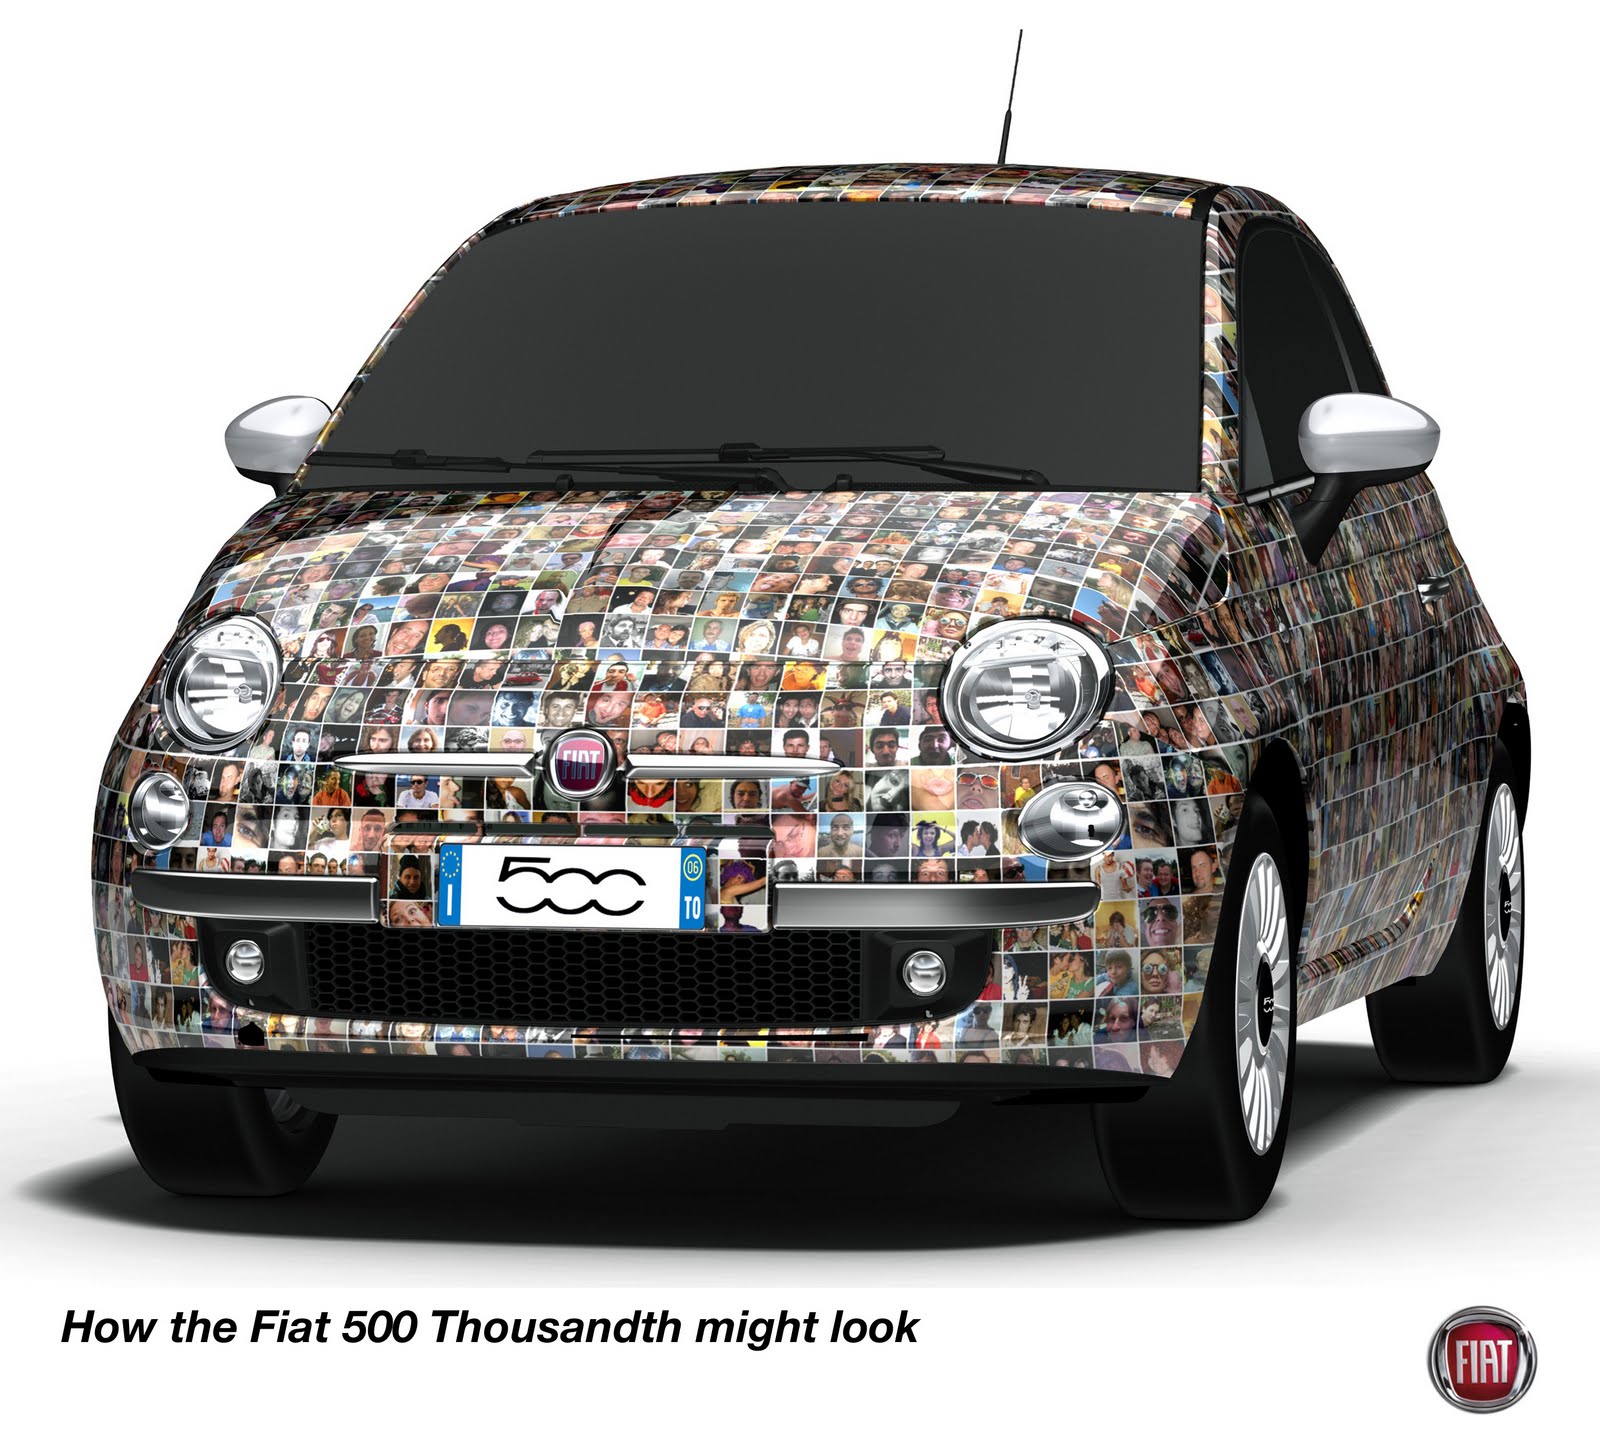 Fiat 500 Thousandth